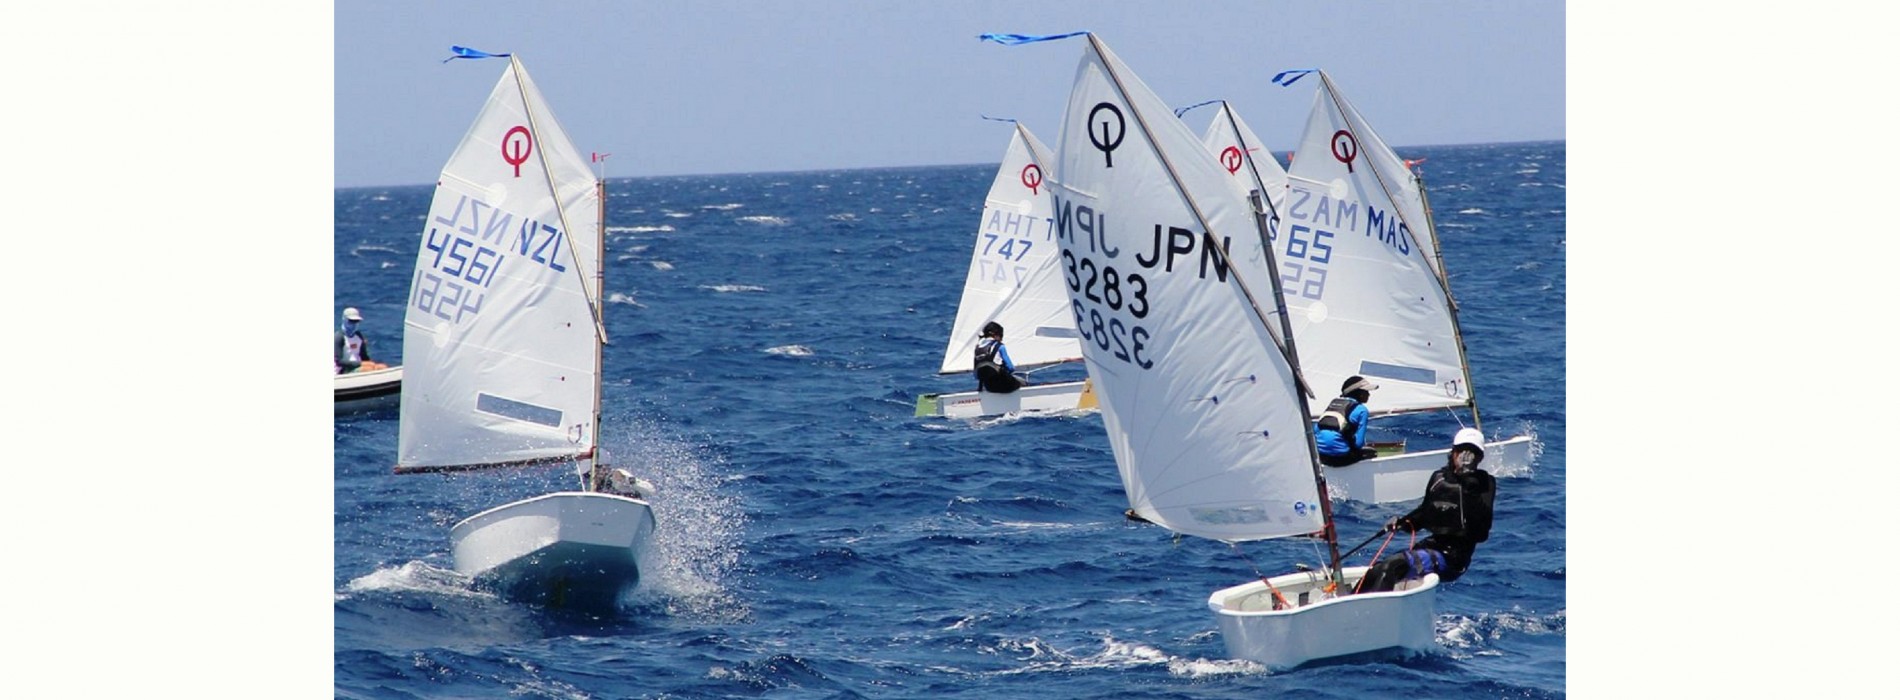 Trinco Blu by Cinnamon hosted the annual Sailing Regatta for the 9th consecutive year